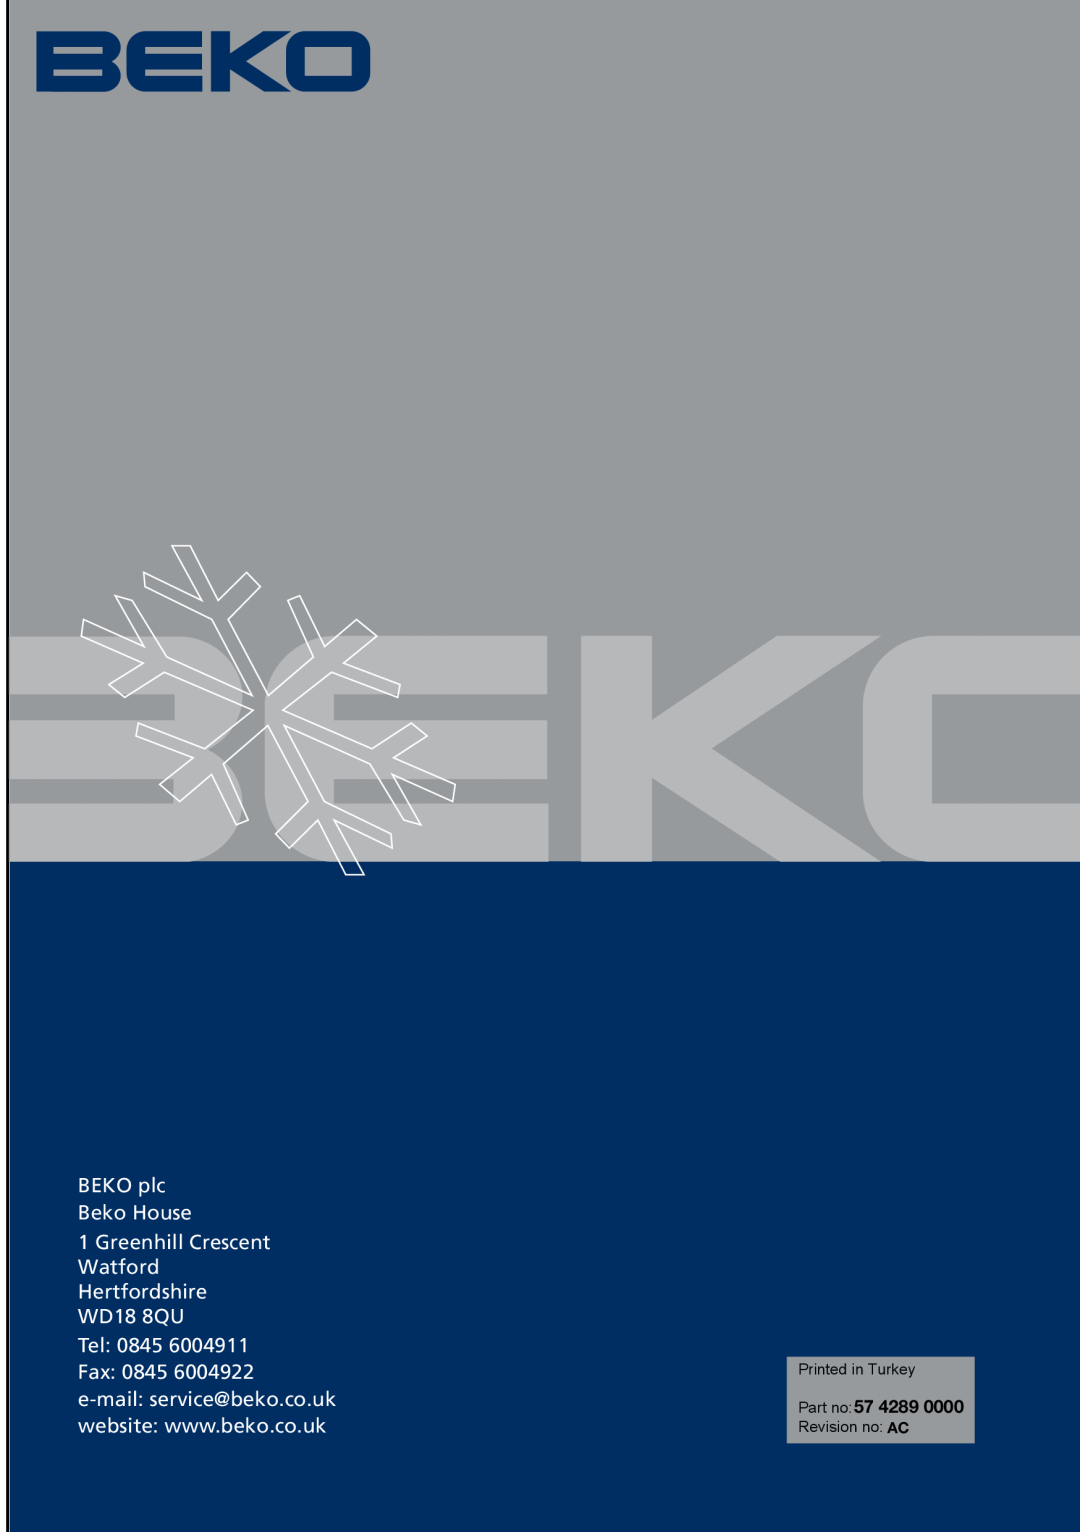 Beko LXD 6155 S BEKO plc Beko House 1 Greenhill Crescent Watford, Hertfordshire WD18 8QU Tel 0845 Fax, Revision no AC 